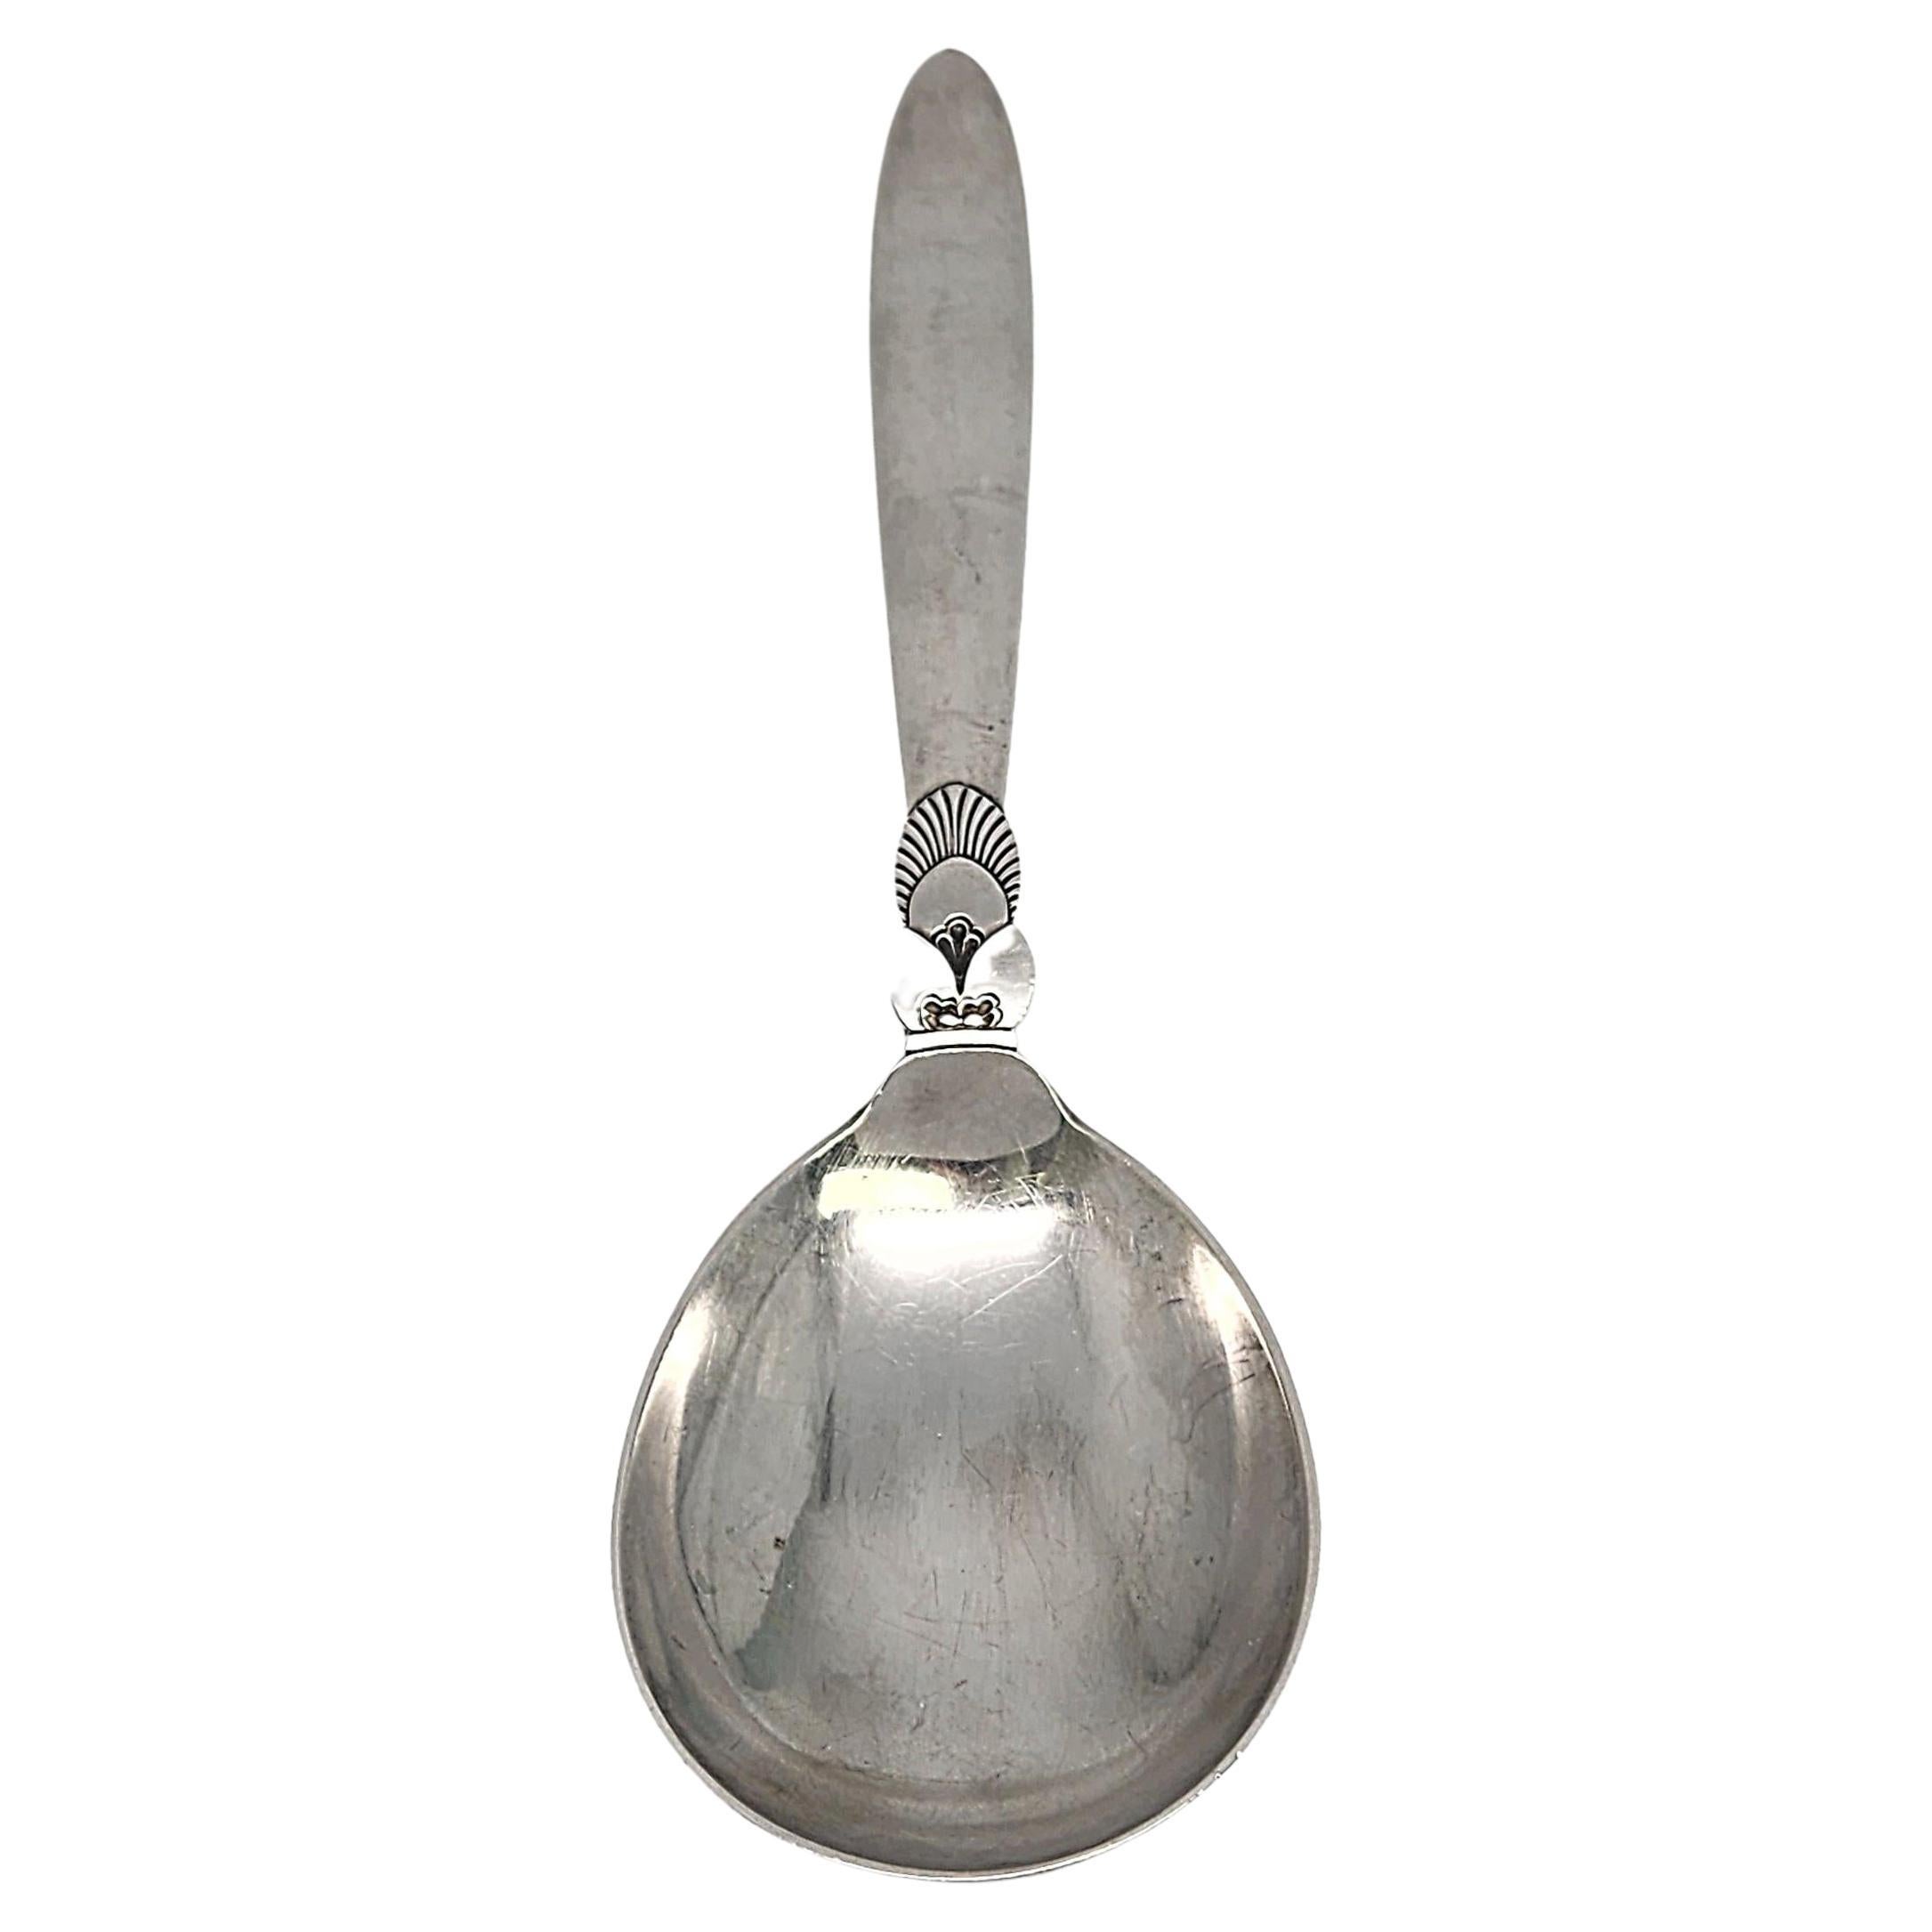 Georg Jensen Denmark Cactus Sterling Silver Small Serving Spoon 8" #16893